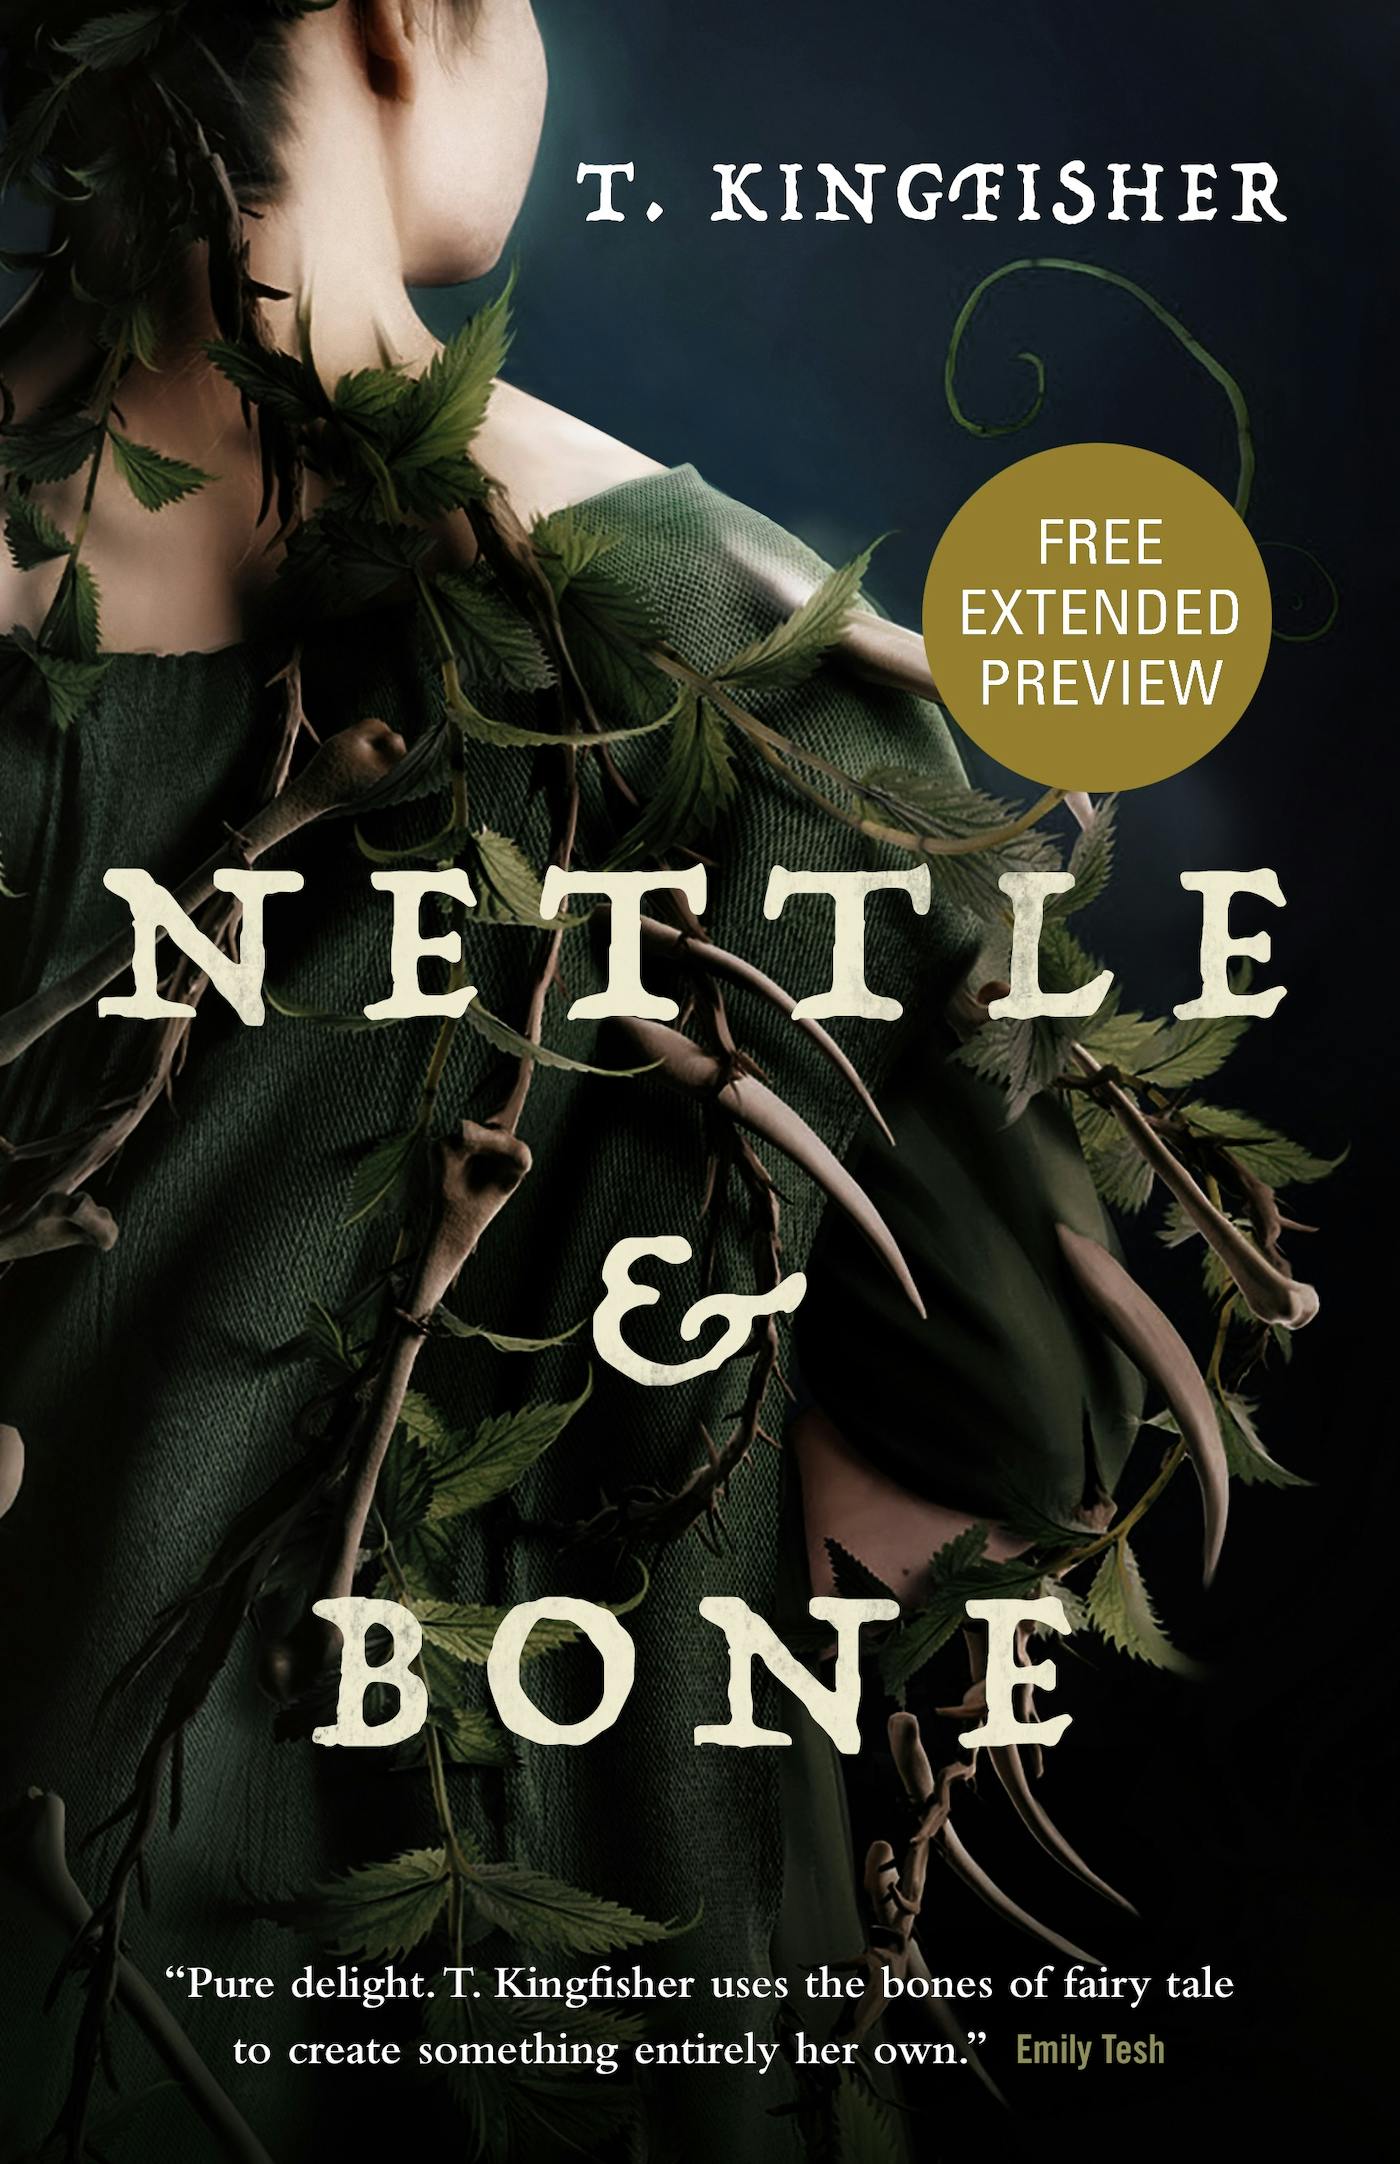 Cover for the book titled as: Nettle & Bone Sneak Peek